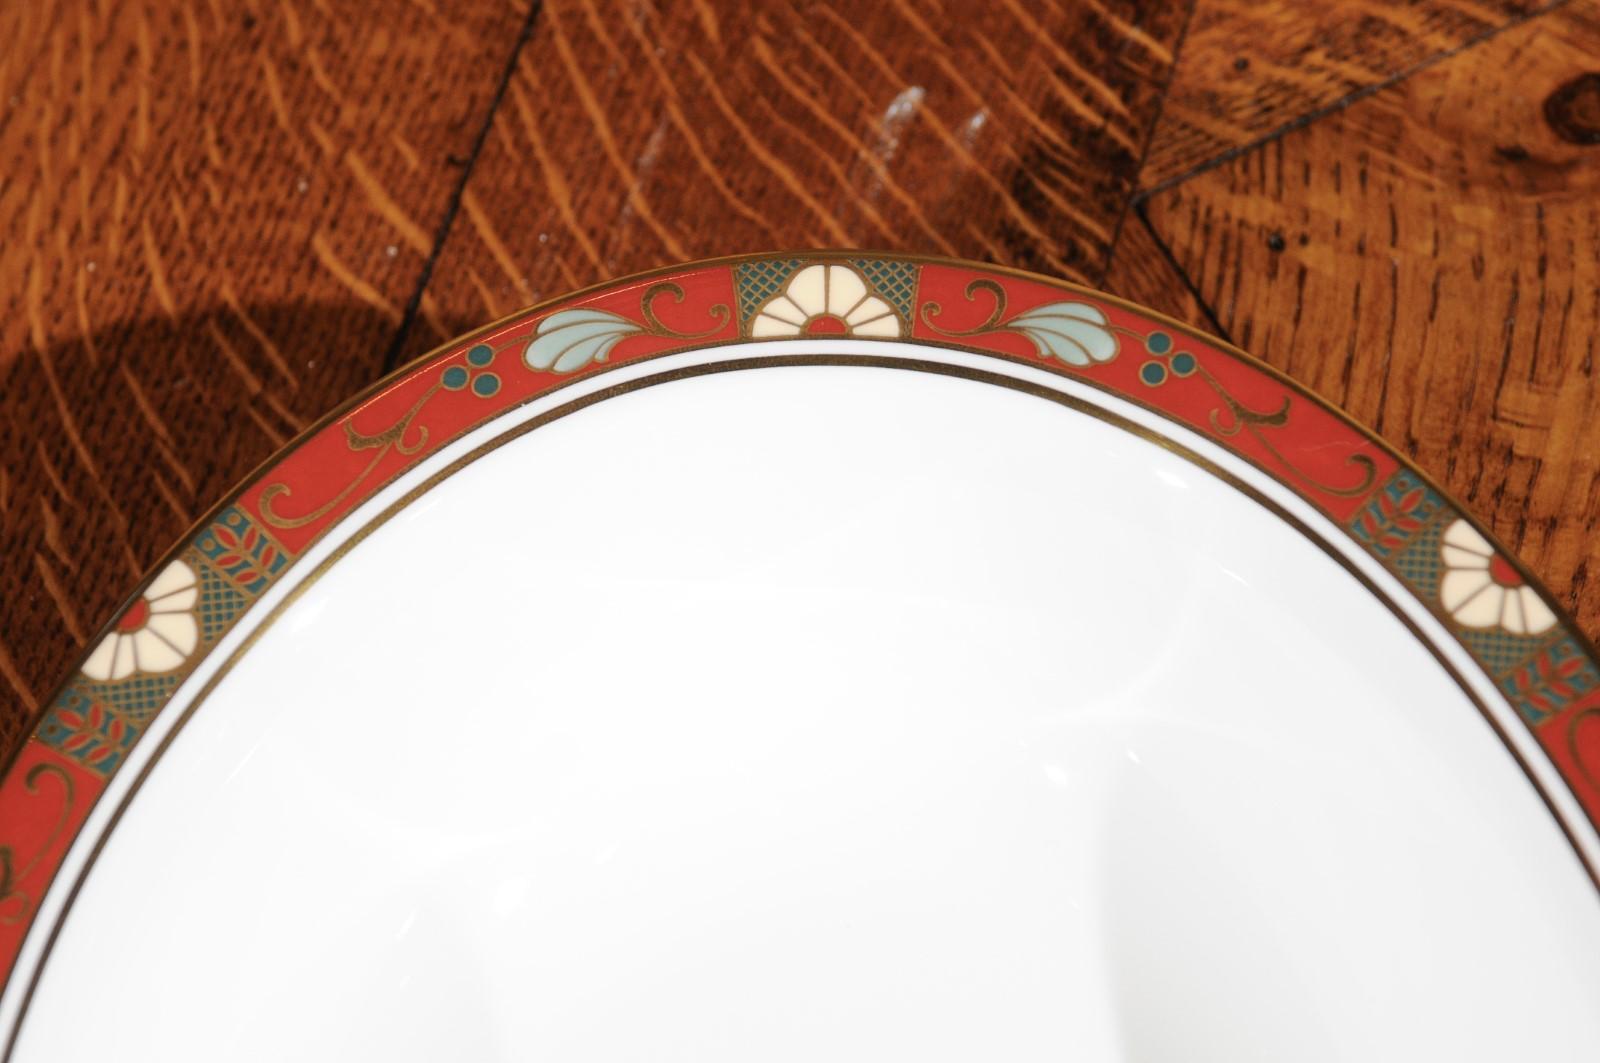 English Royal Crown Derby Porcelain Serving Bowl with a 1317 Cloisonné Pattern For Sale 1